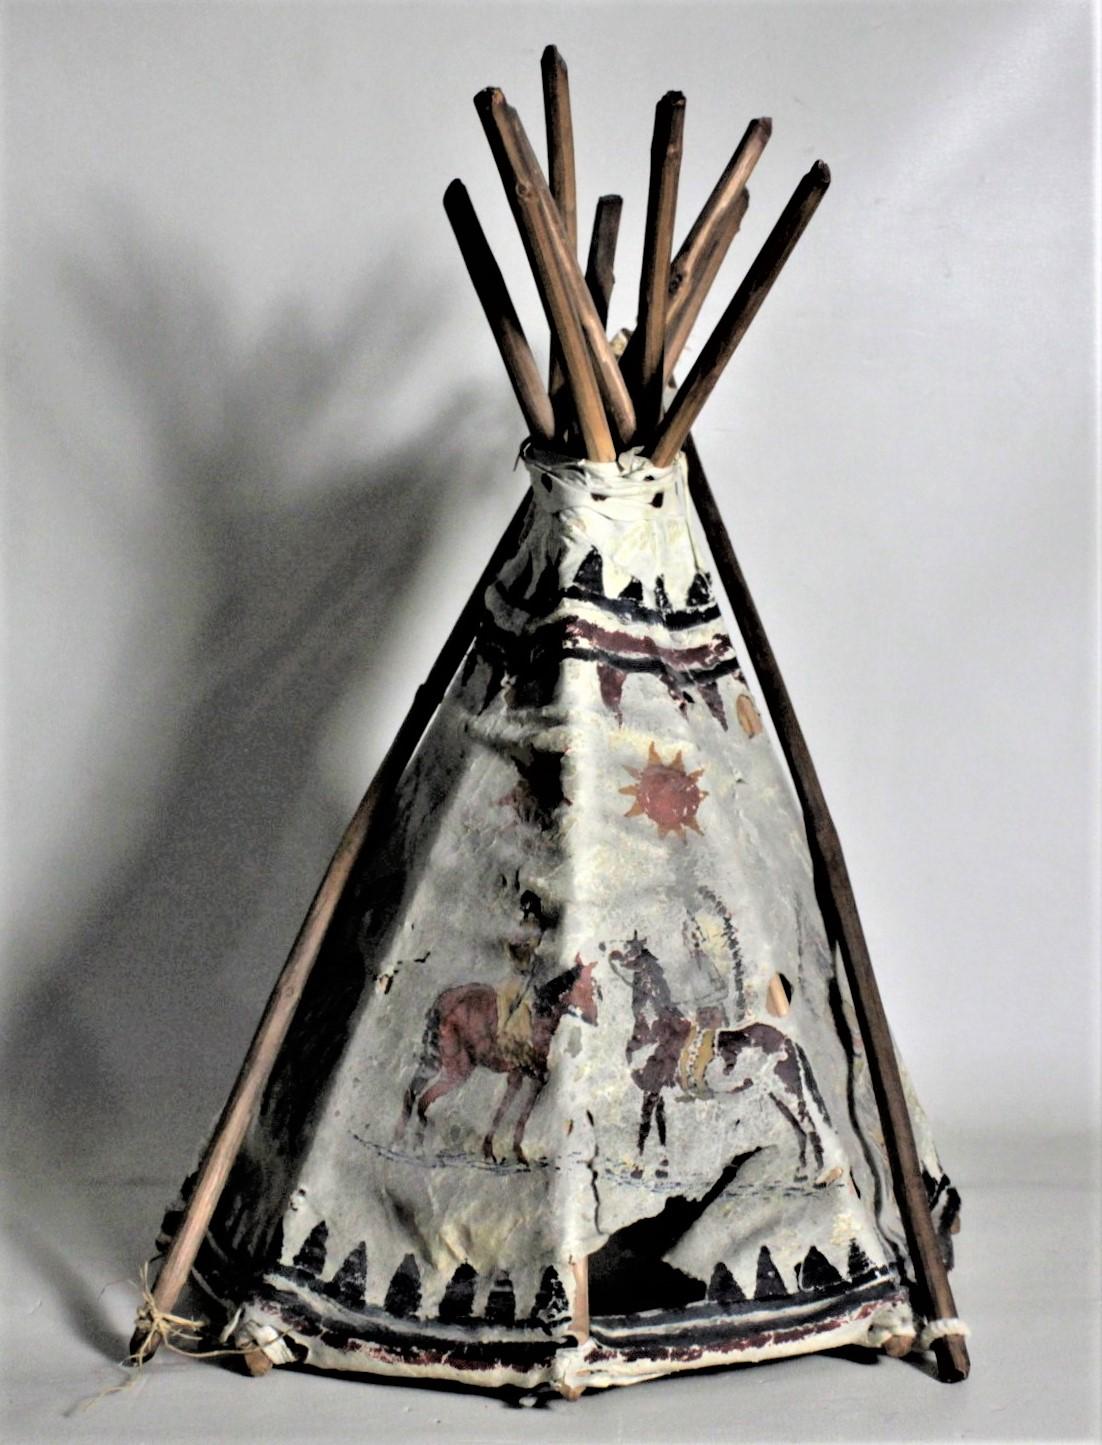 Native American Mid-Century Modern Era Indigenous American Miniature Souvenir or Toy Teepee 